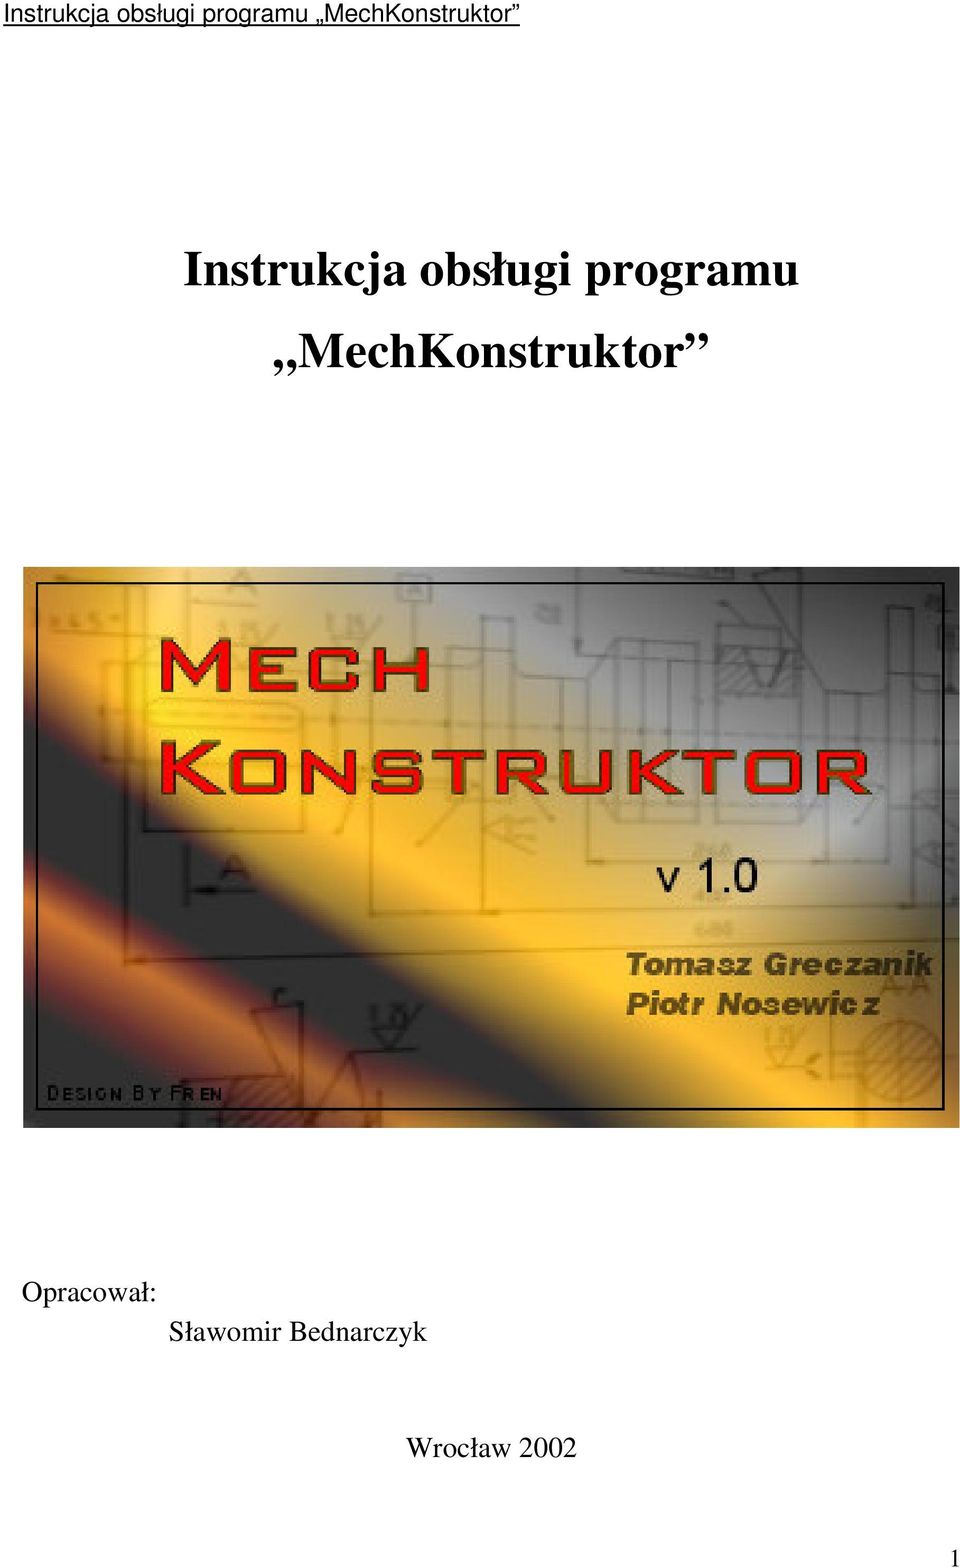 MechKonstruktor